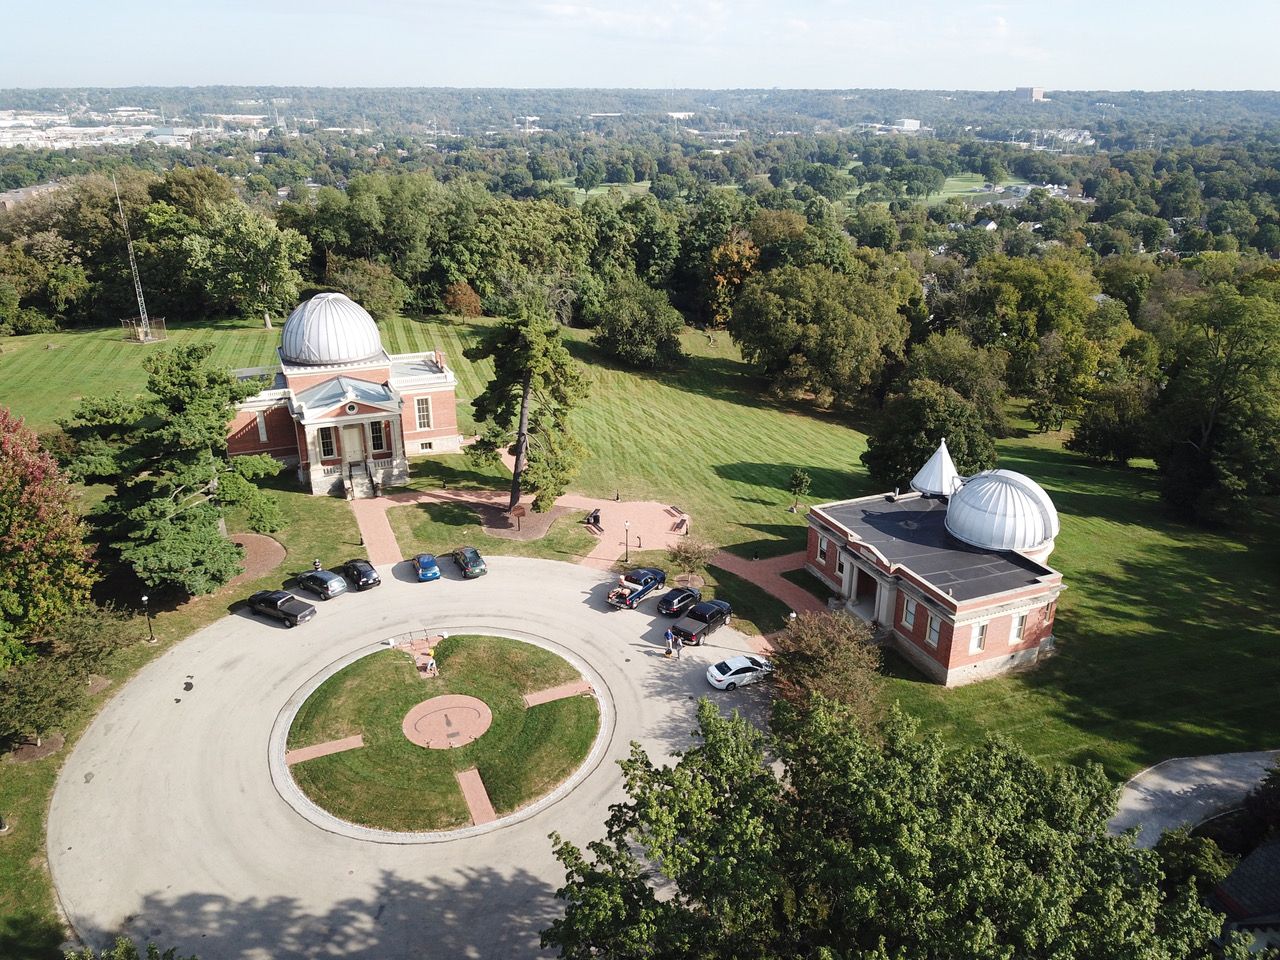 The present site of the Cincinnati Observatory. (Photo courtesy of Cincinnati Observatory)